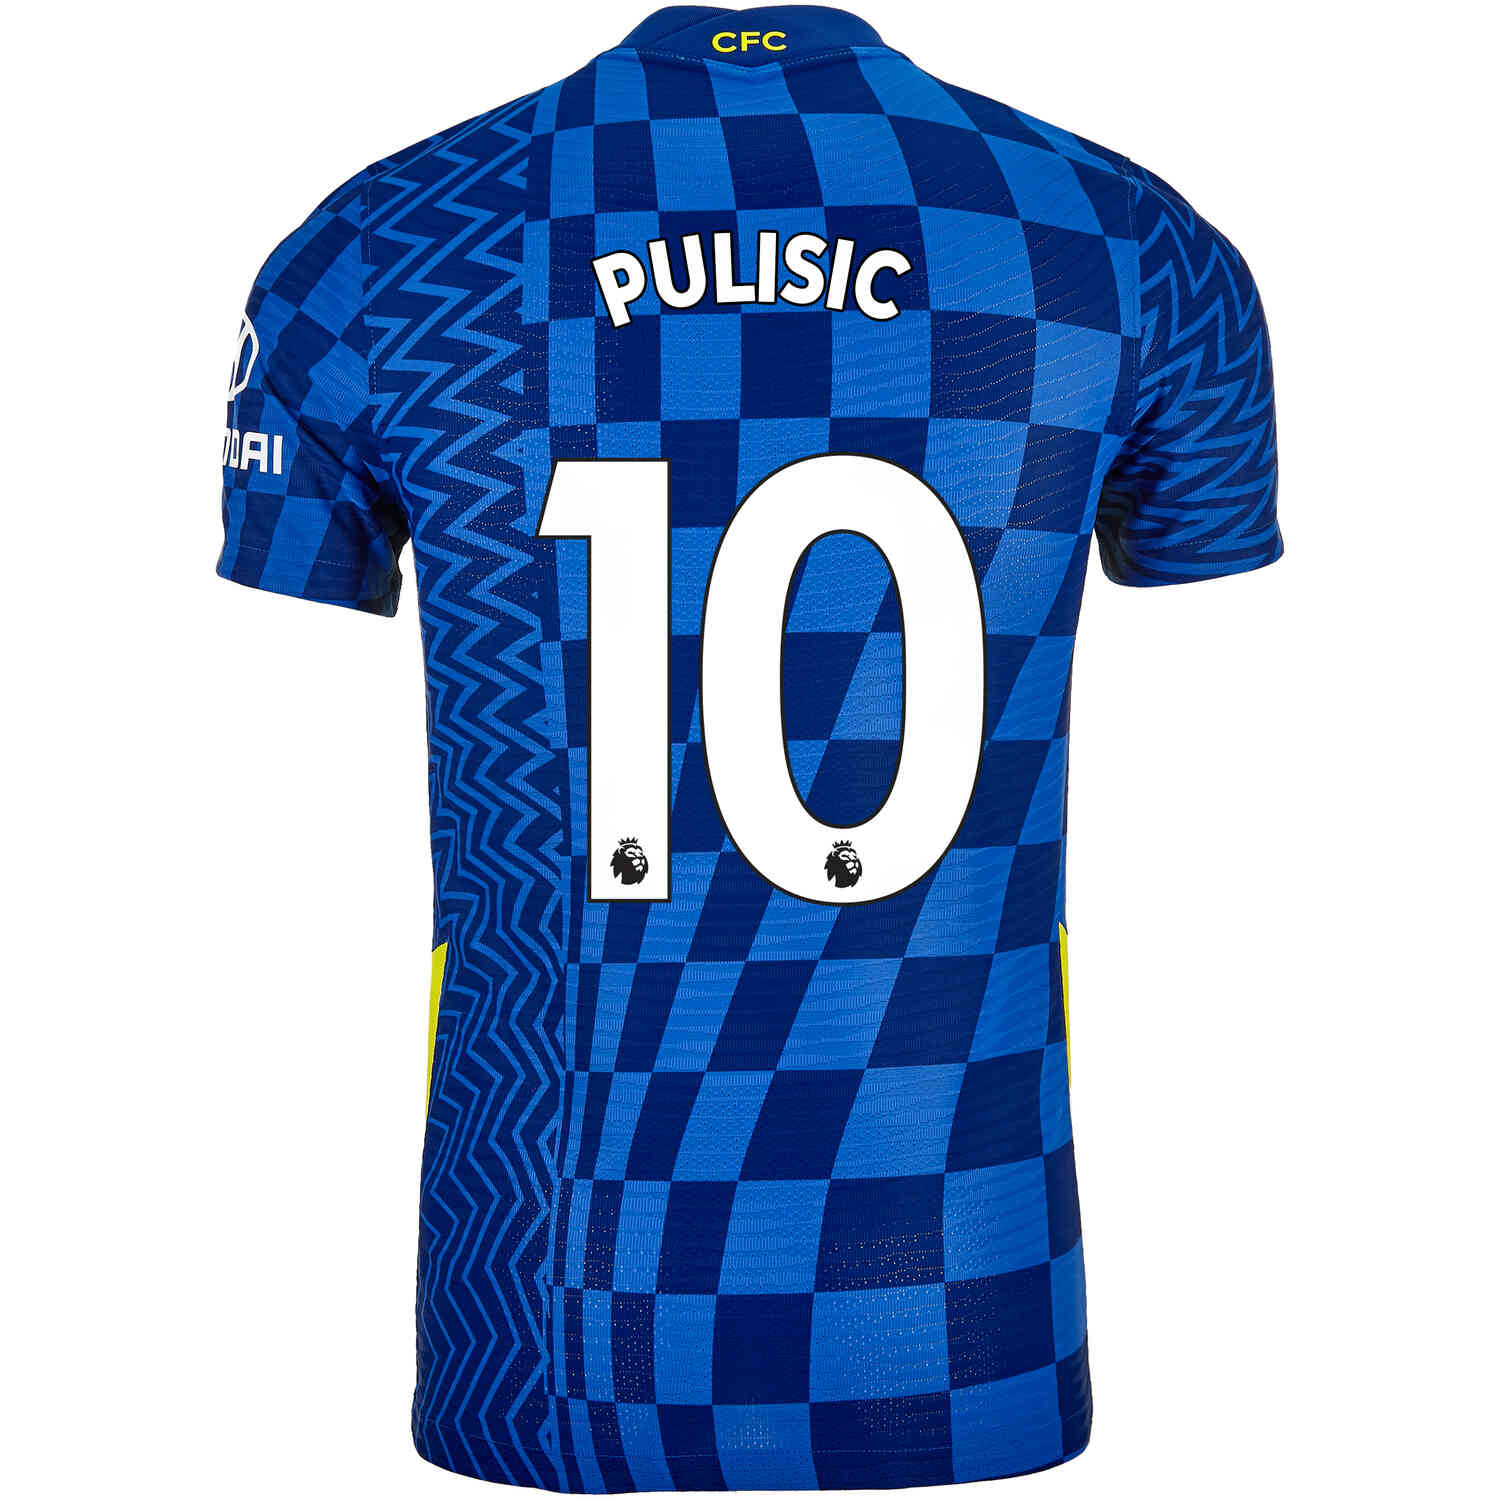 2021/22 Nike Christian Pulisic Chelsea Home Match Jersey - SoccerPro